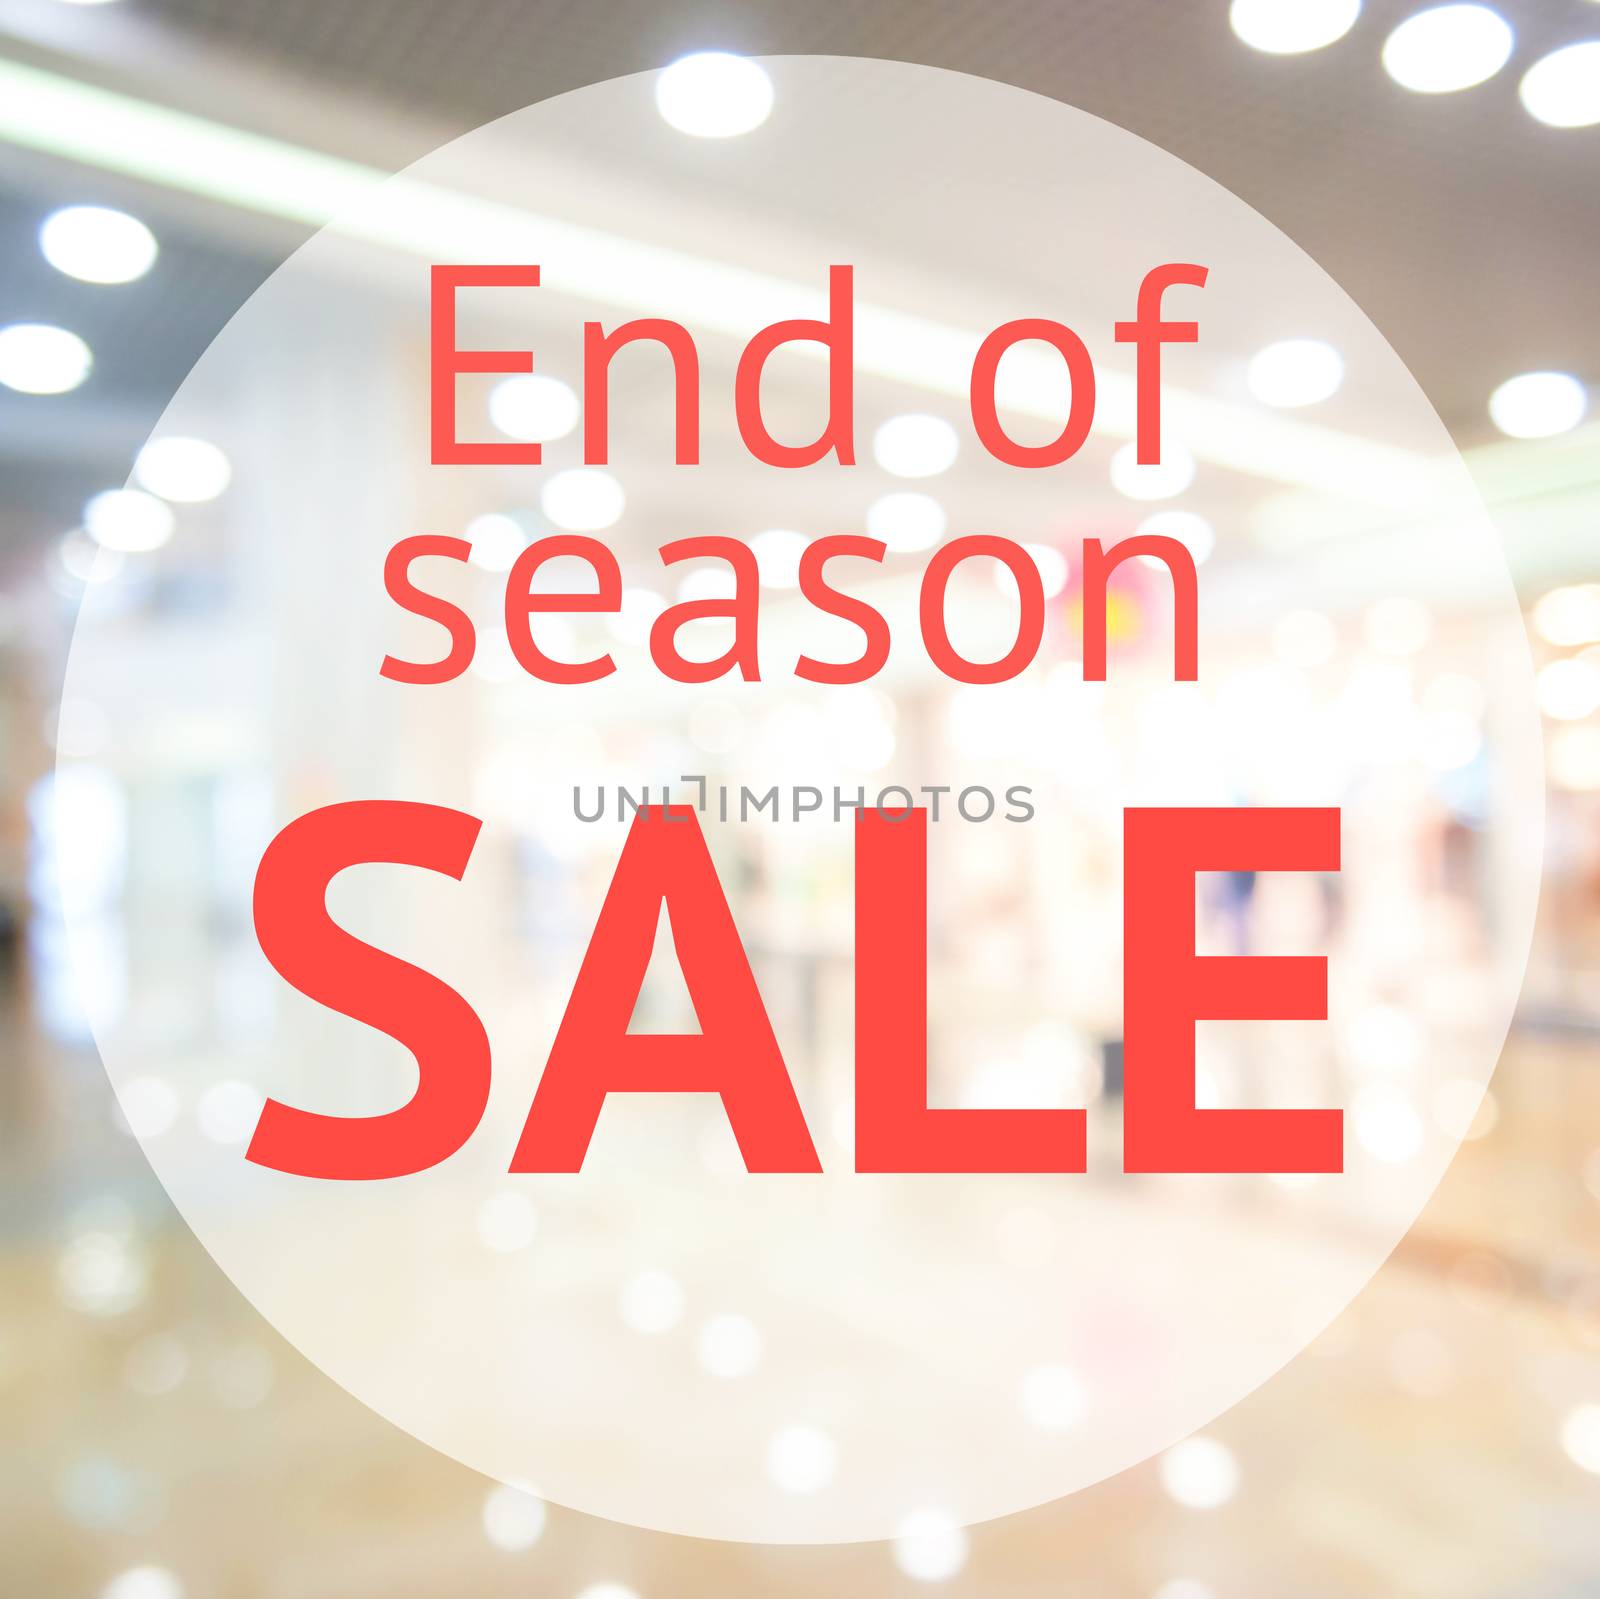 End of season sale sign by fascinadora